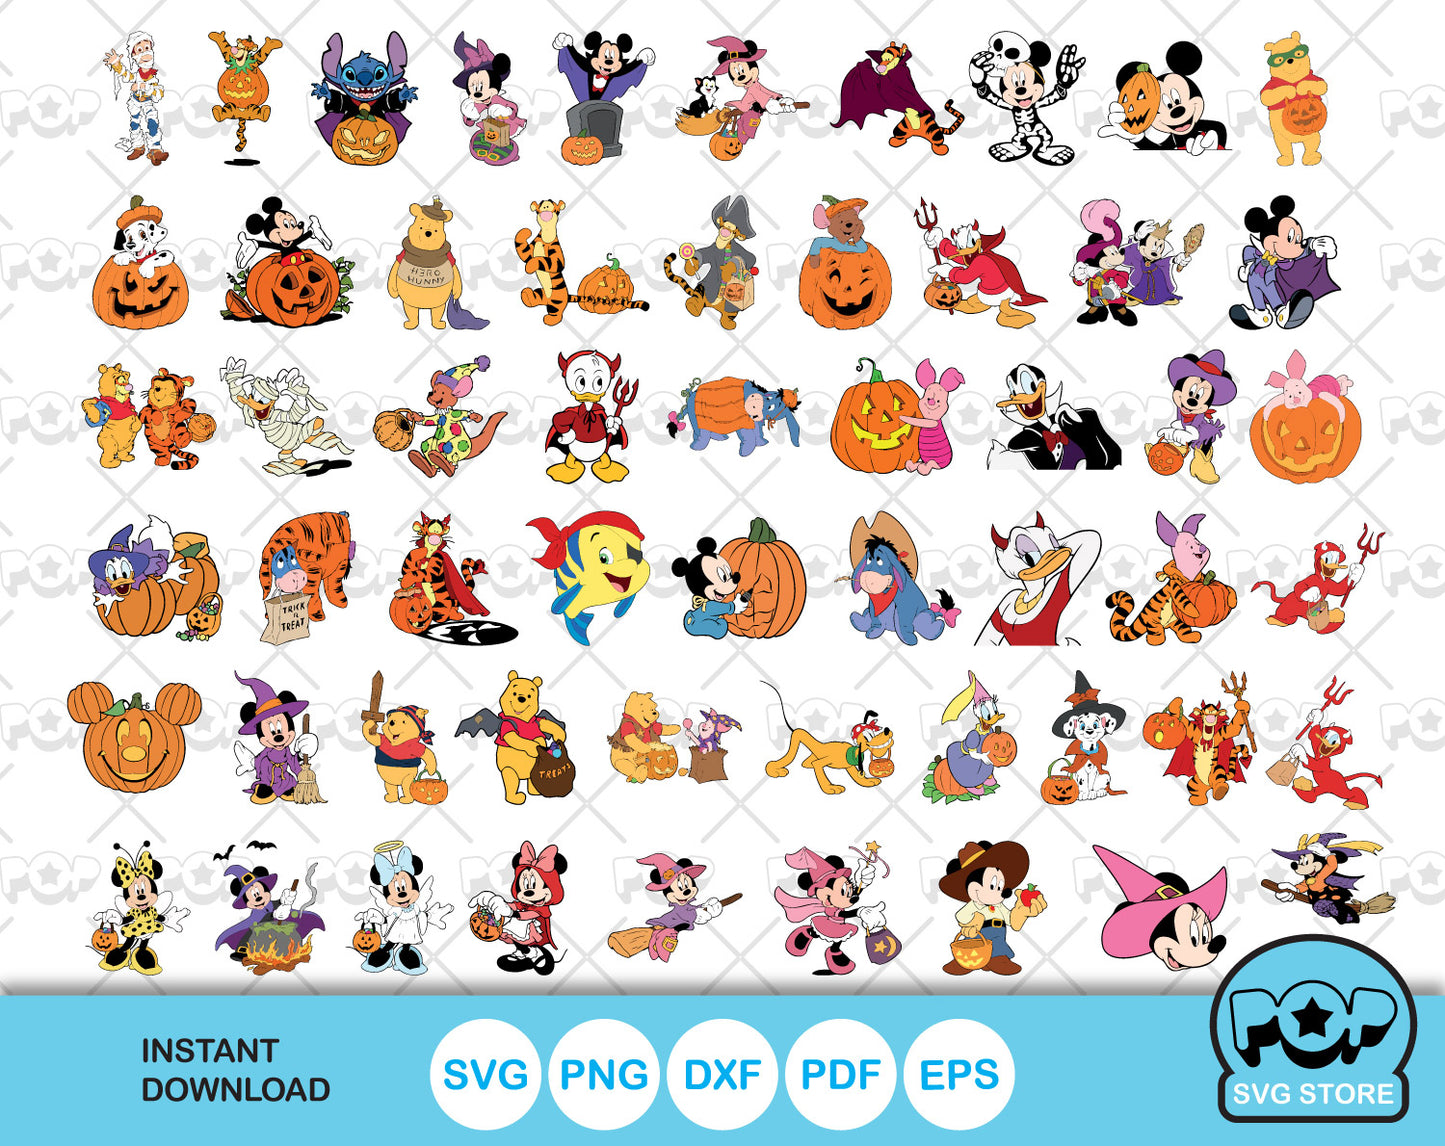 Disney Halloween 100 cliparts bundle, SVG cut files for Cricut / Silhouette,  Disney Halloween SVG, instant download